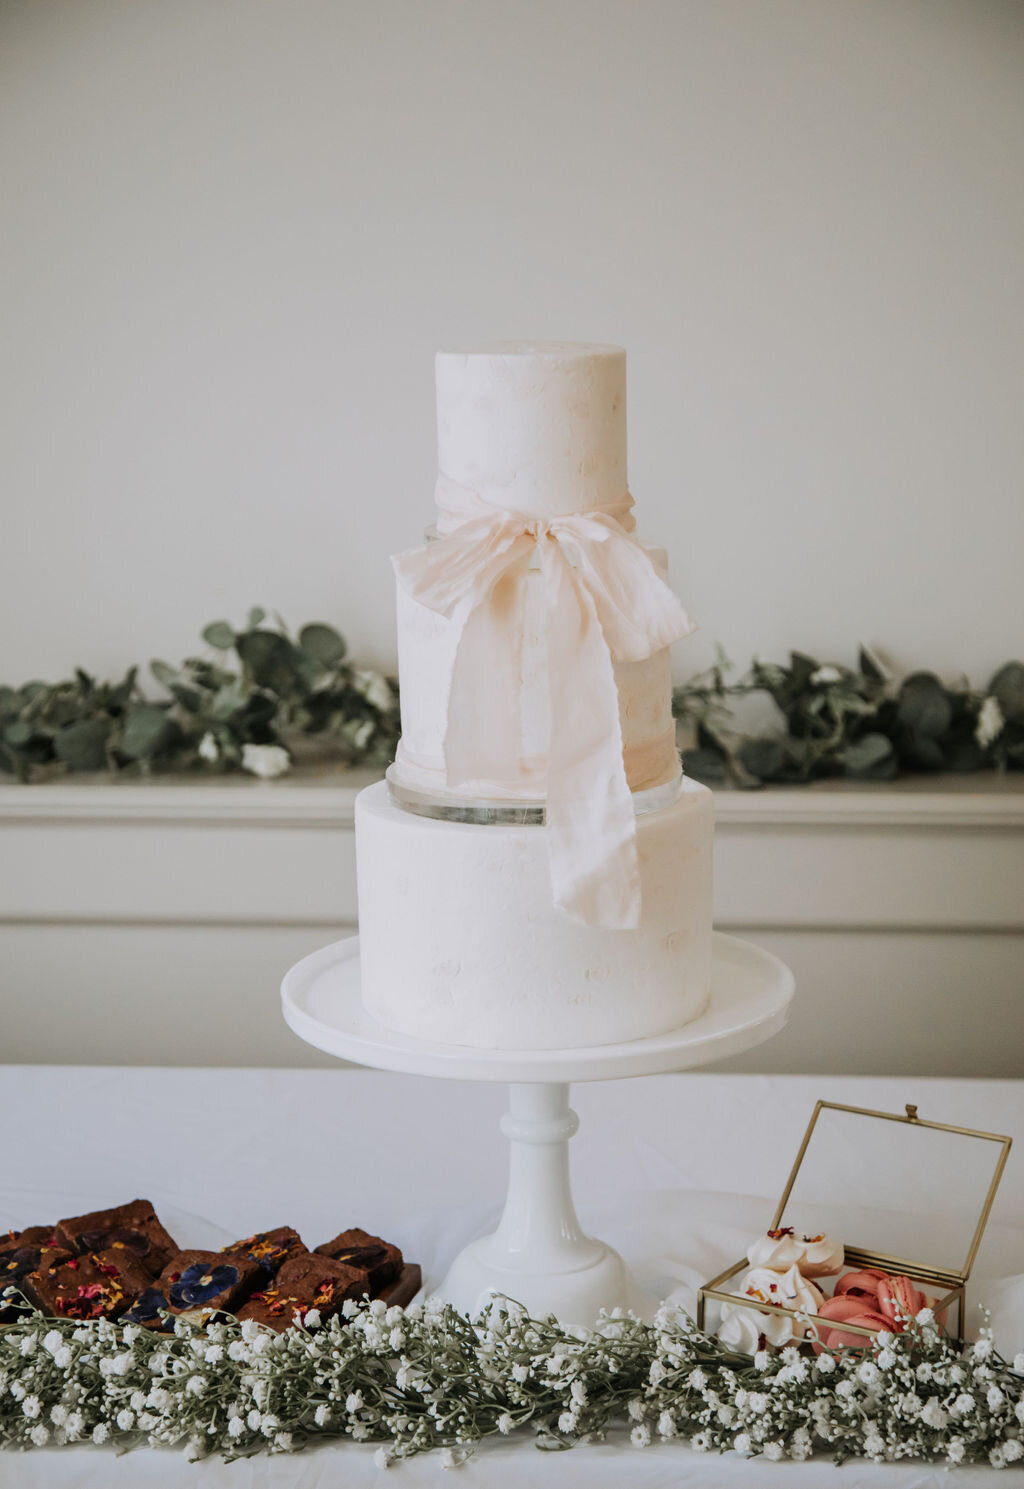 Layers-graces-Essex-Hertfordshire-floral-wedding-cake-designer-5